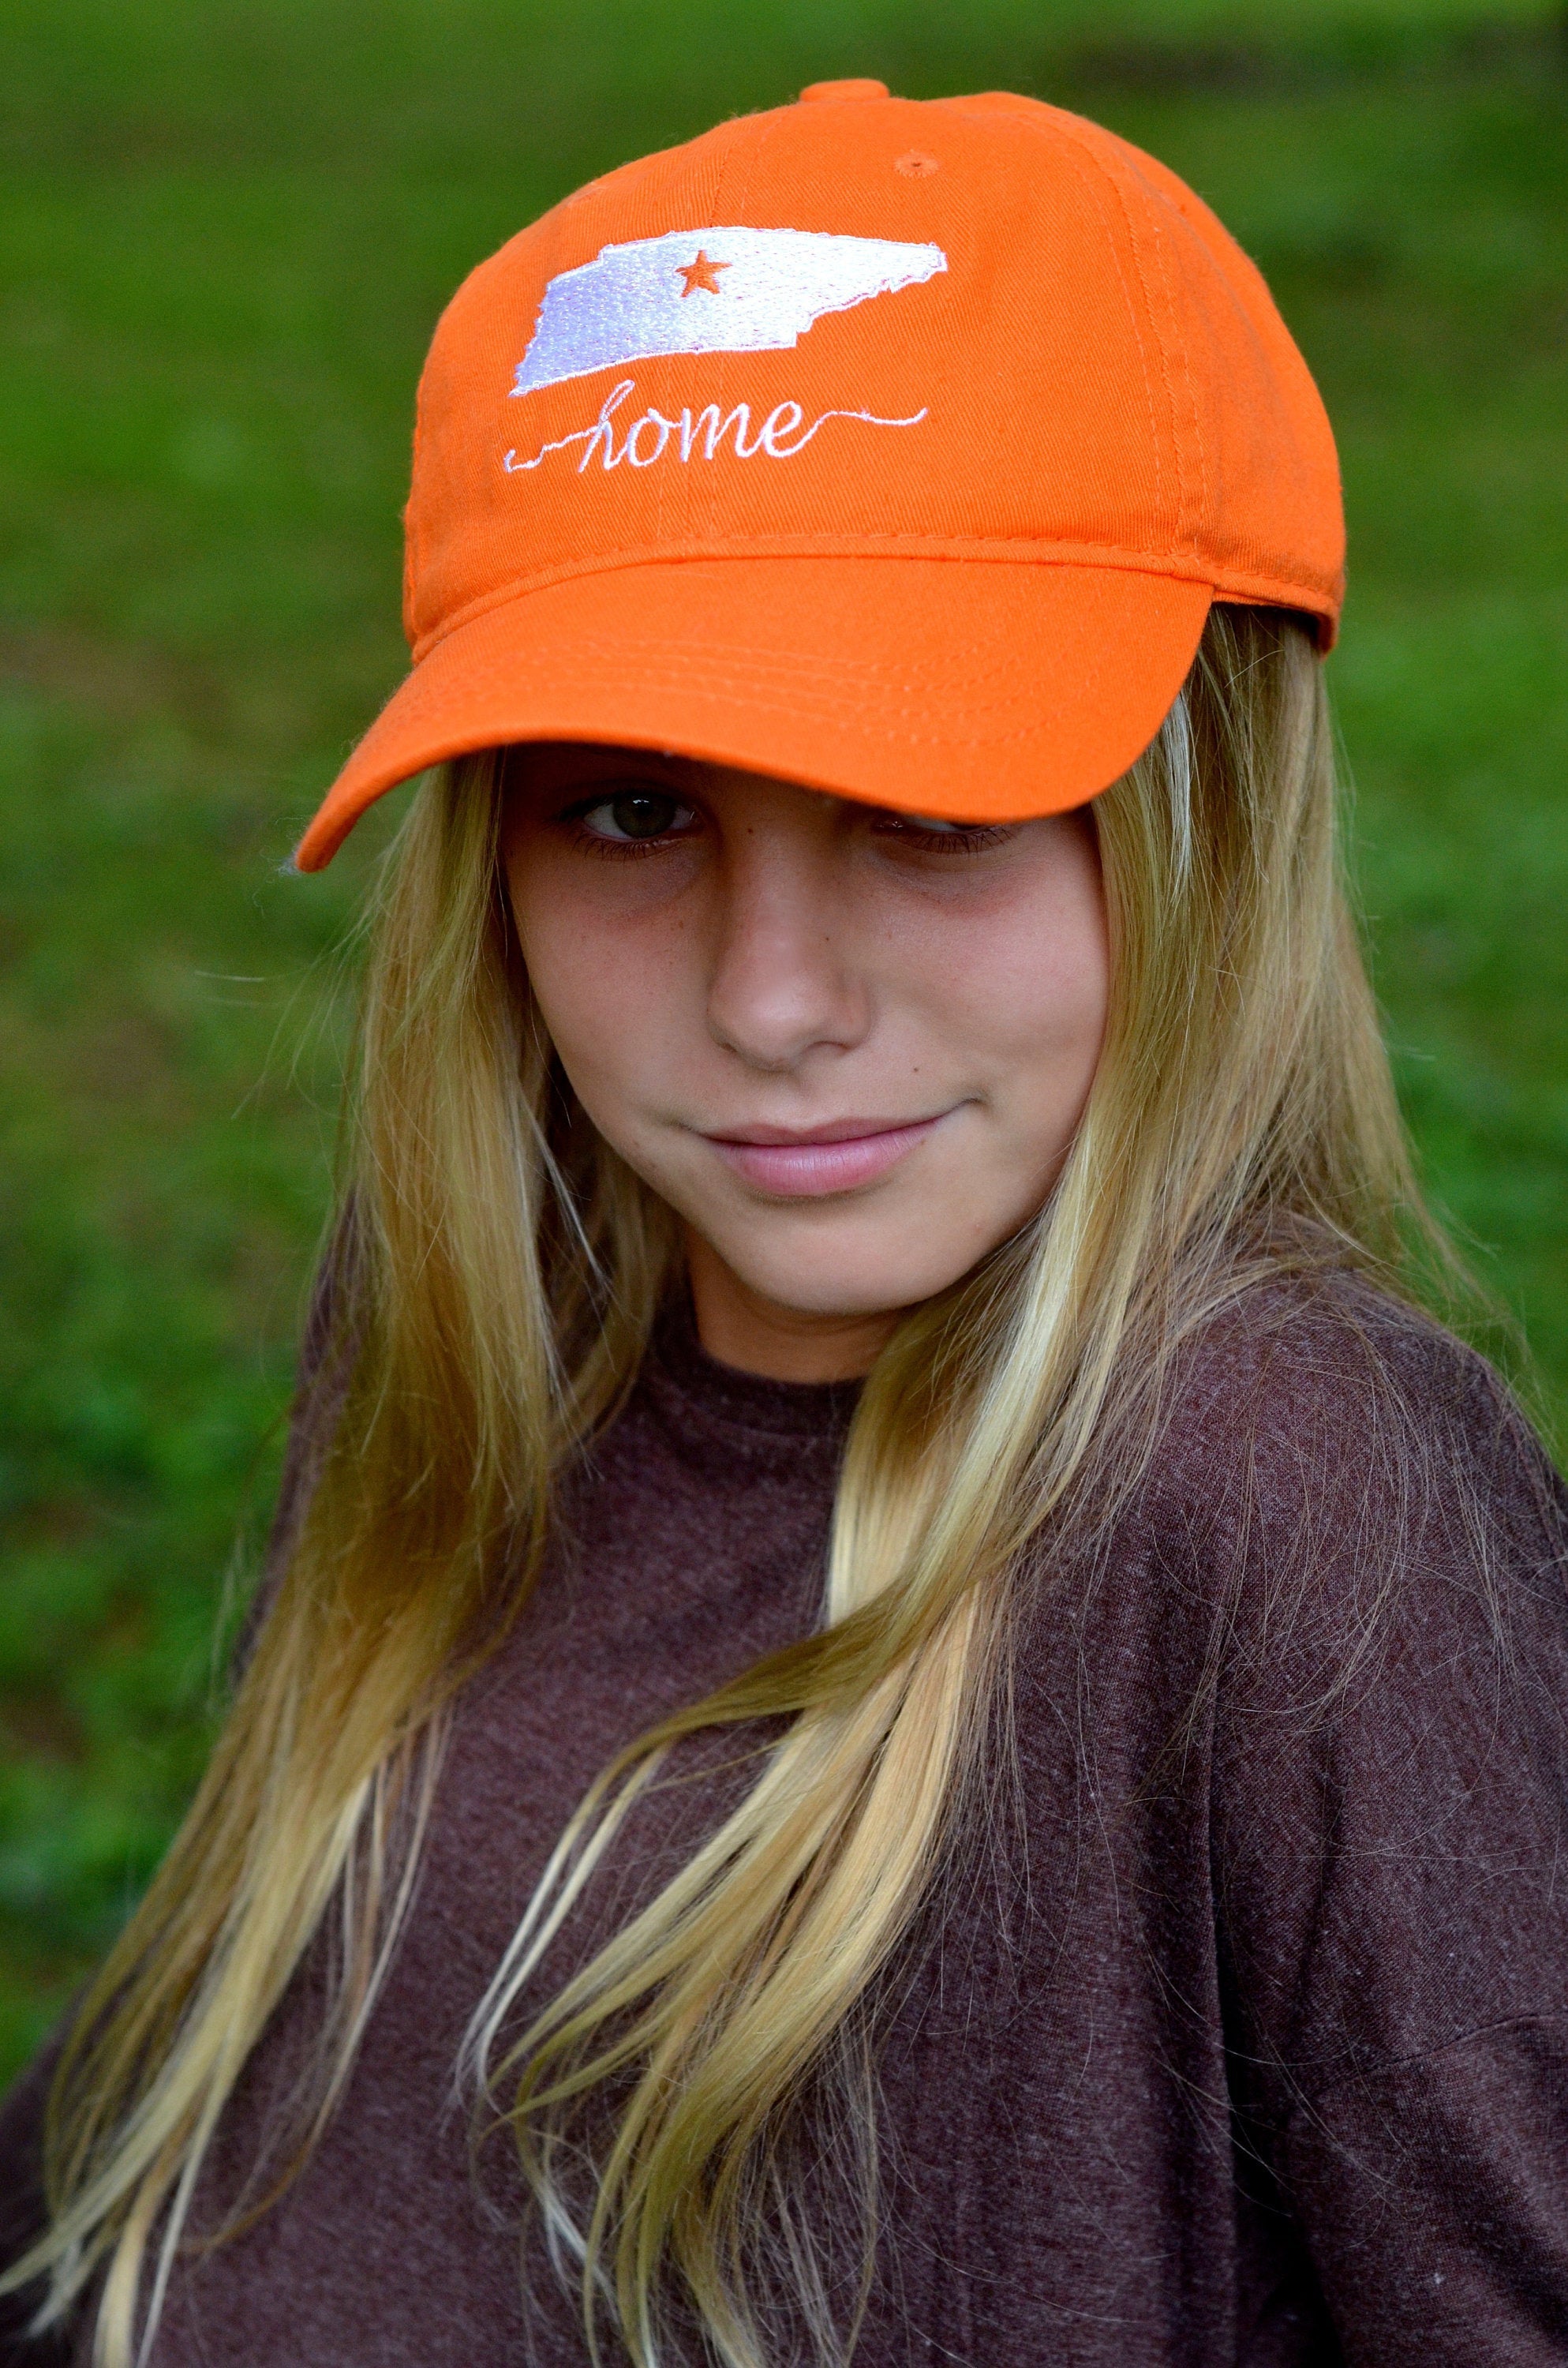 Tennessee Star Orange Detail Distressed Look Unstructured Hat // Tennessee Vols Orange